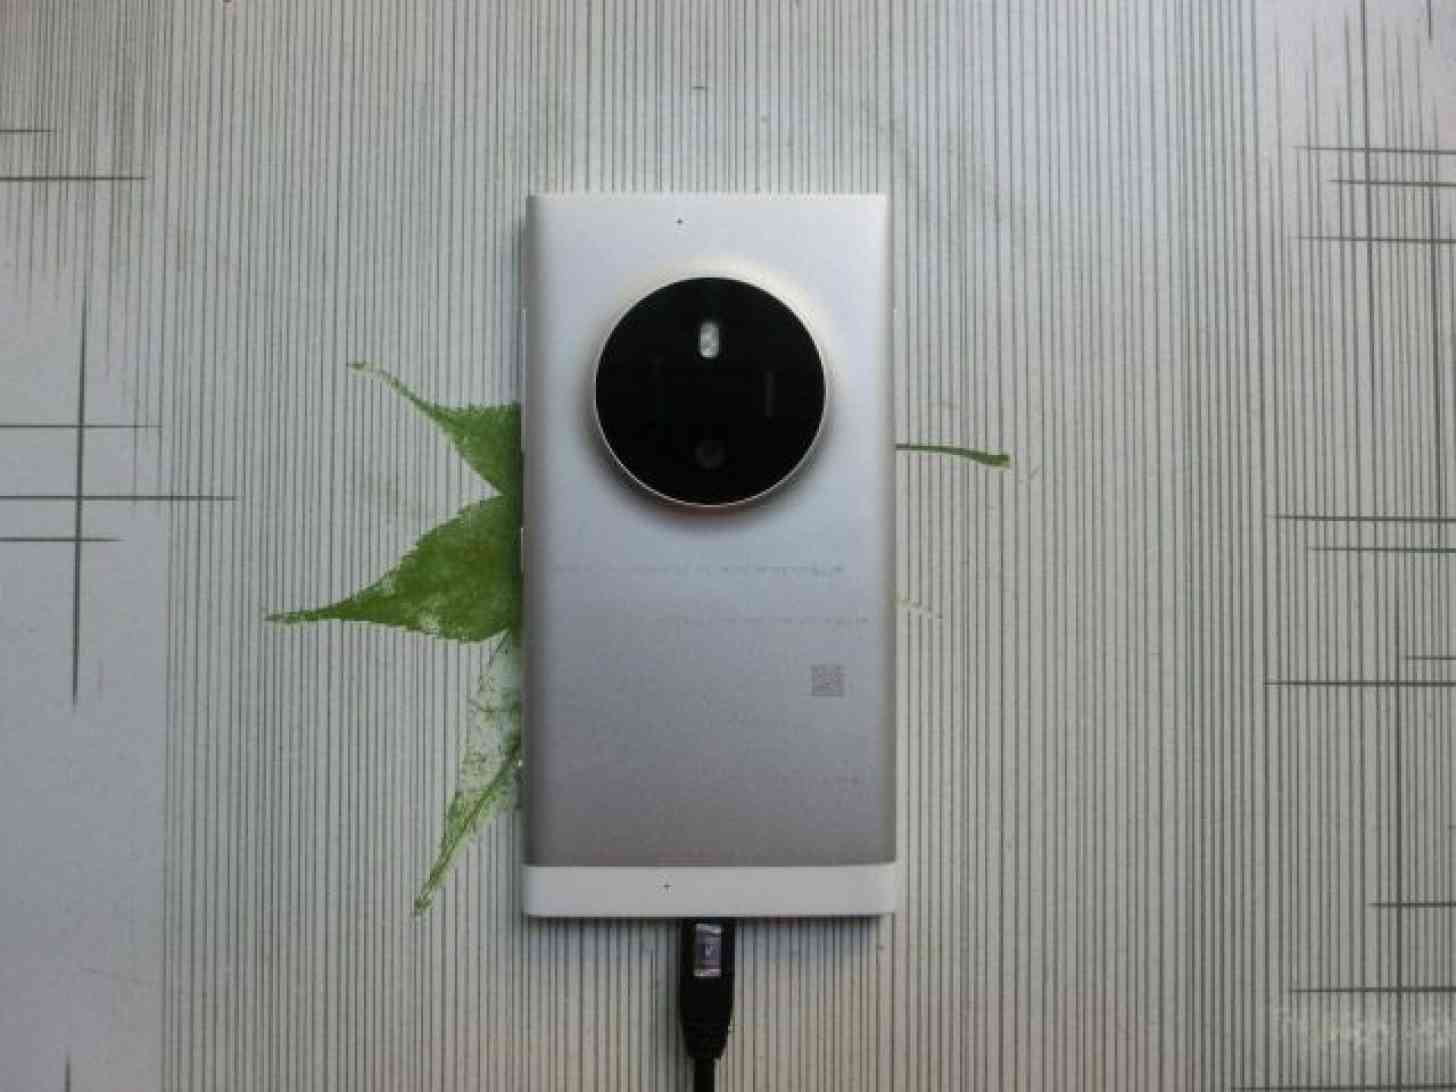 Nokia RM-1052 Microsoft Windows Phone prototype Lumia 1020 camera